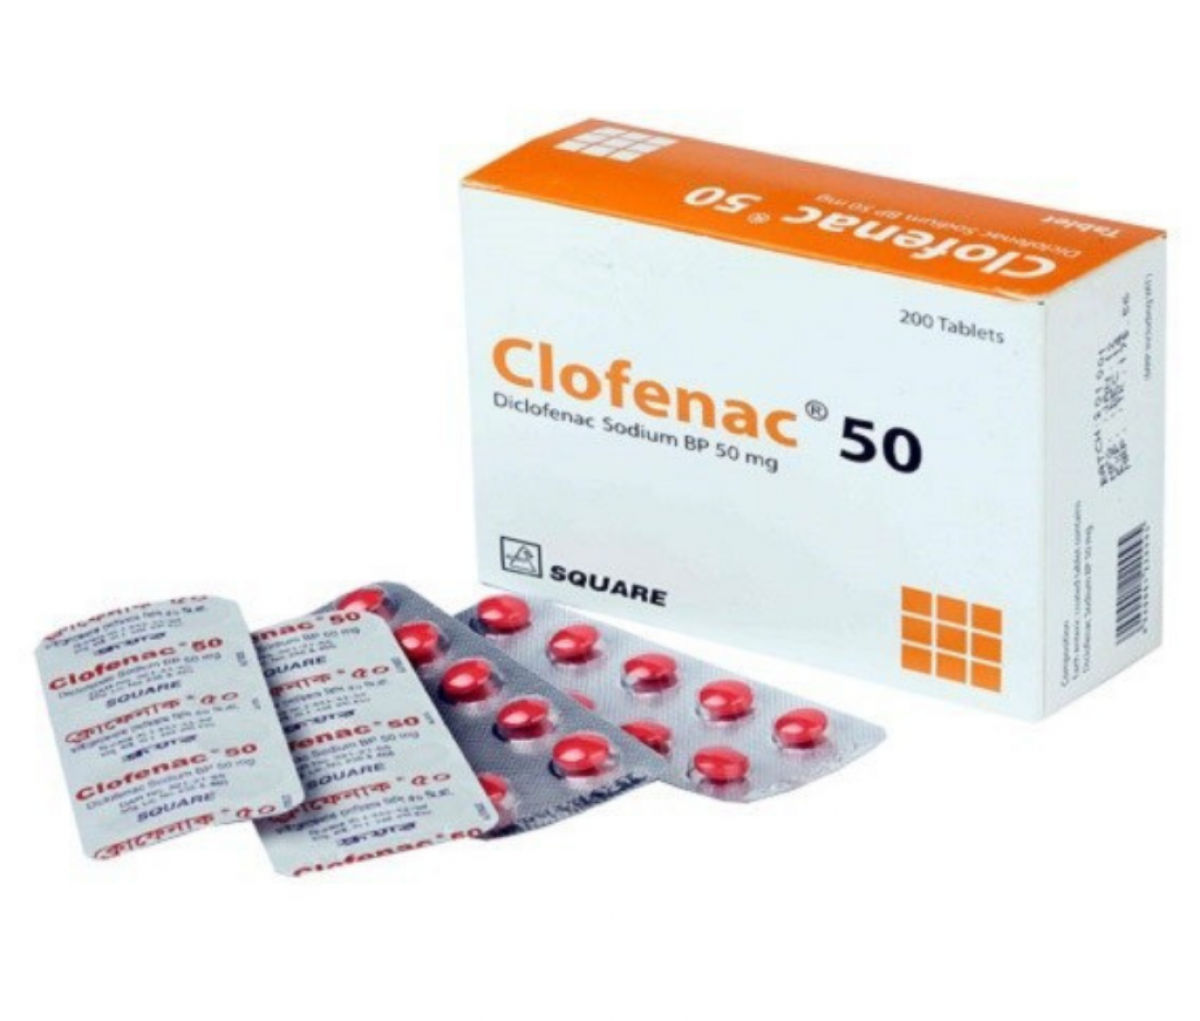 Clofenac 50mg Tablet